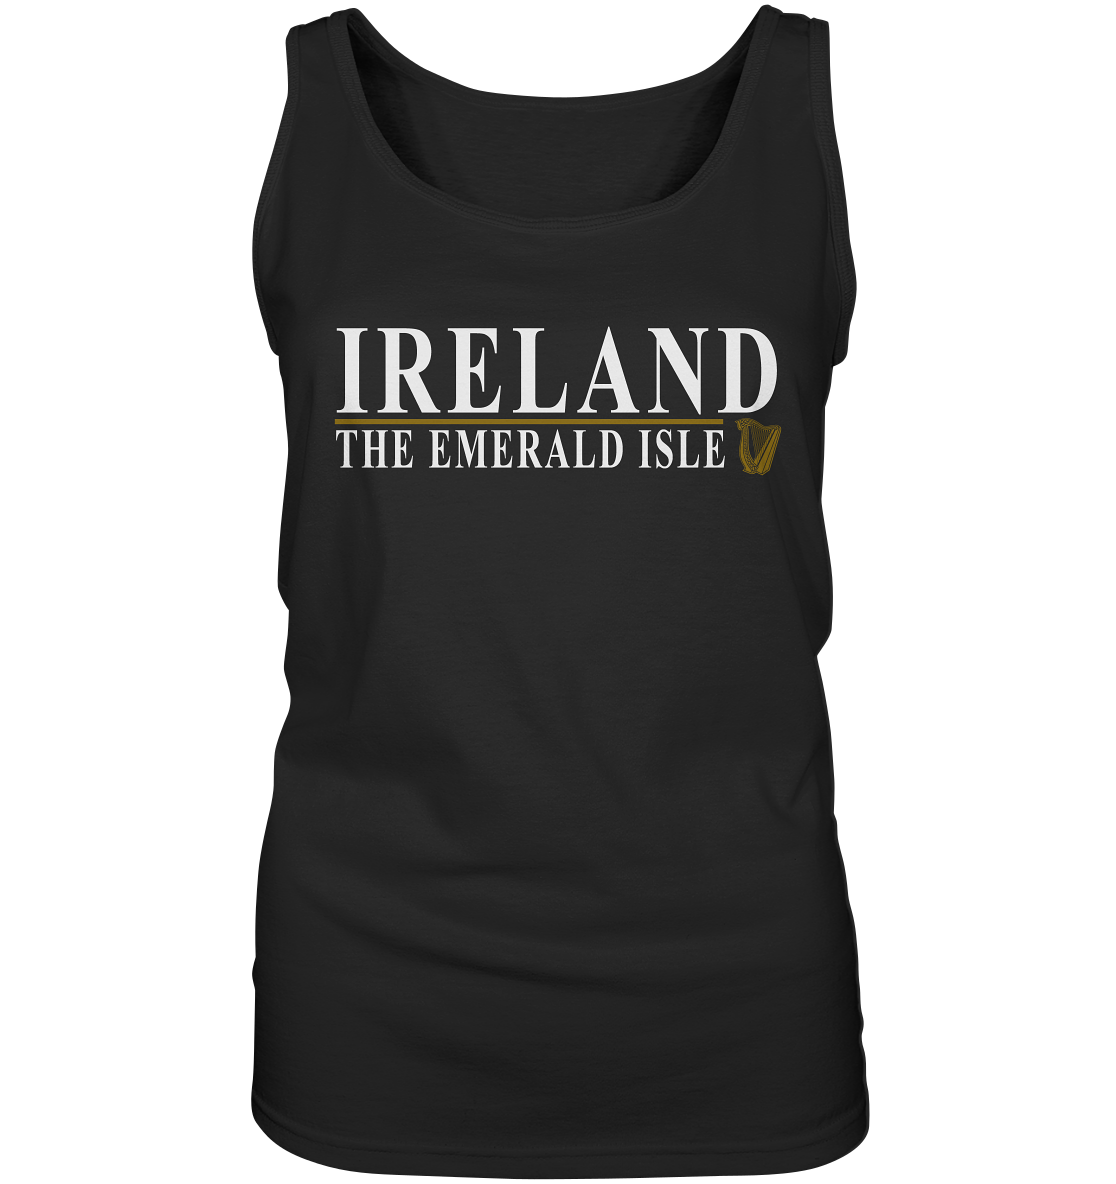 Ireland "The Emerald Isle" - Ladies Tank-Top